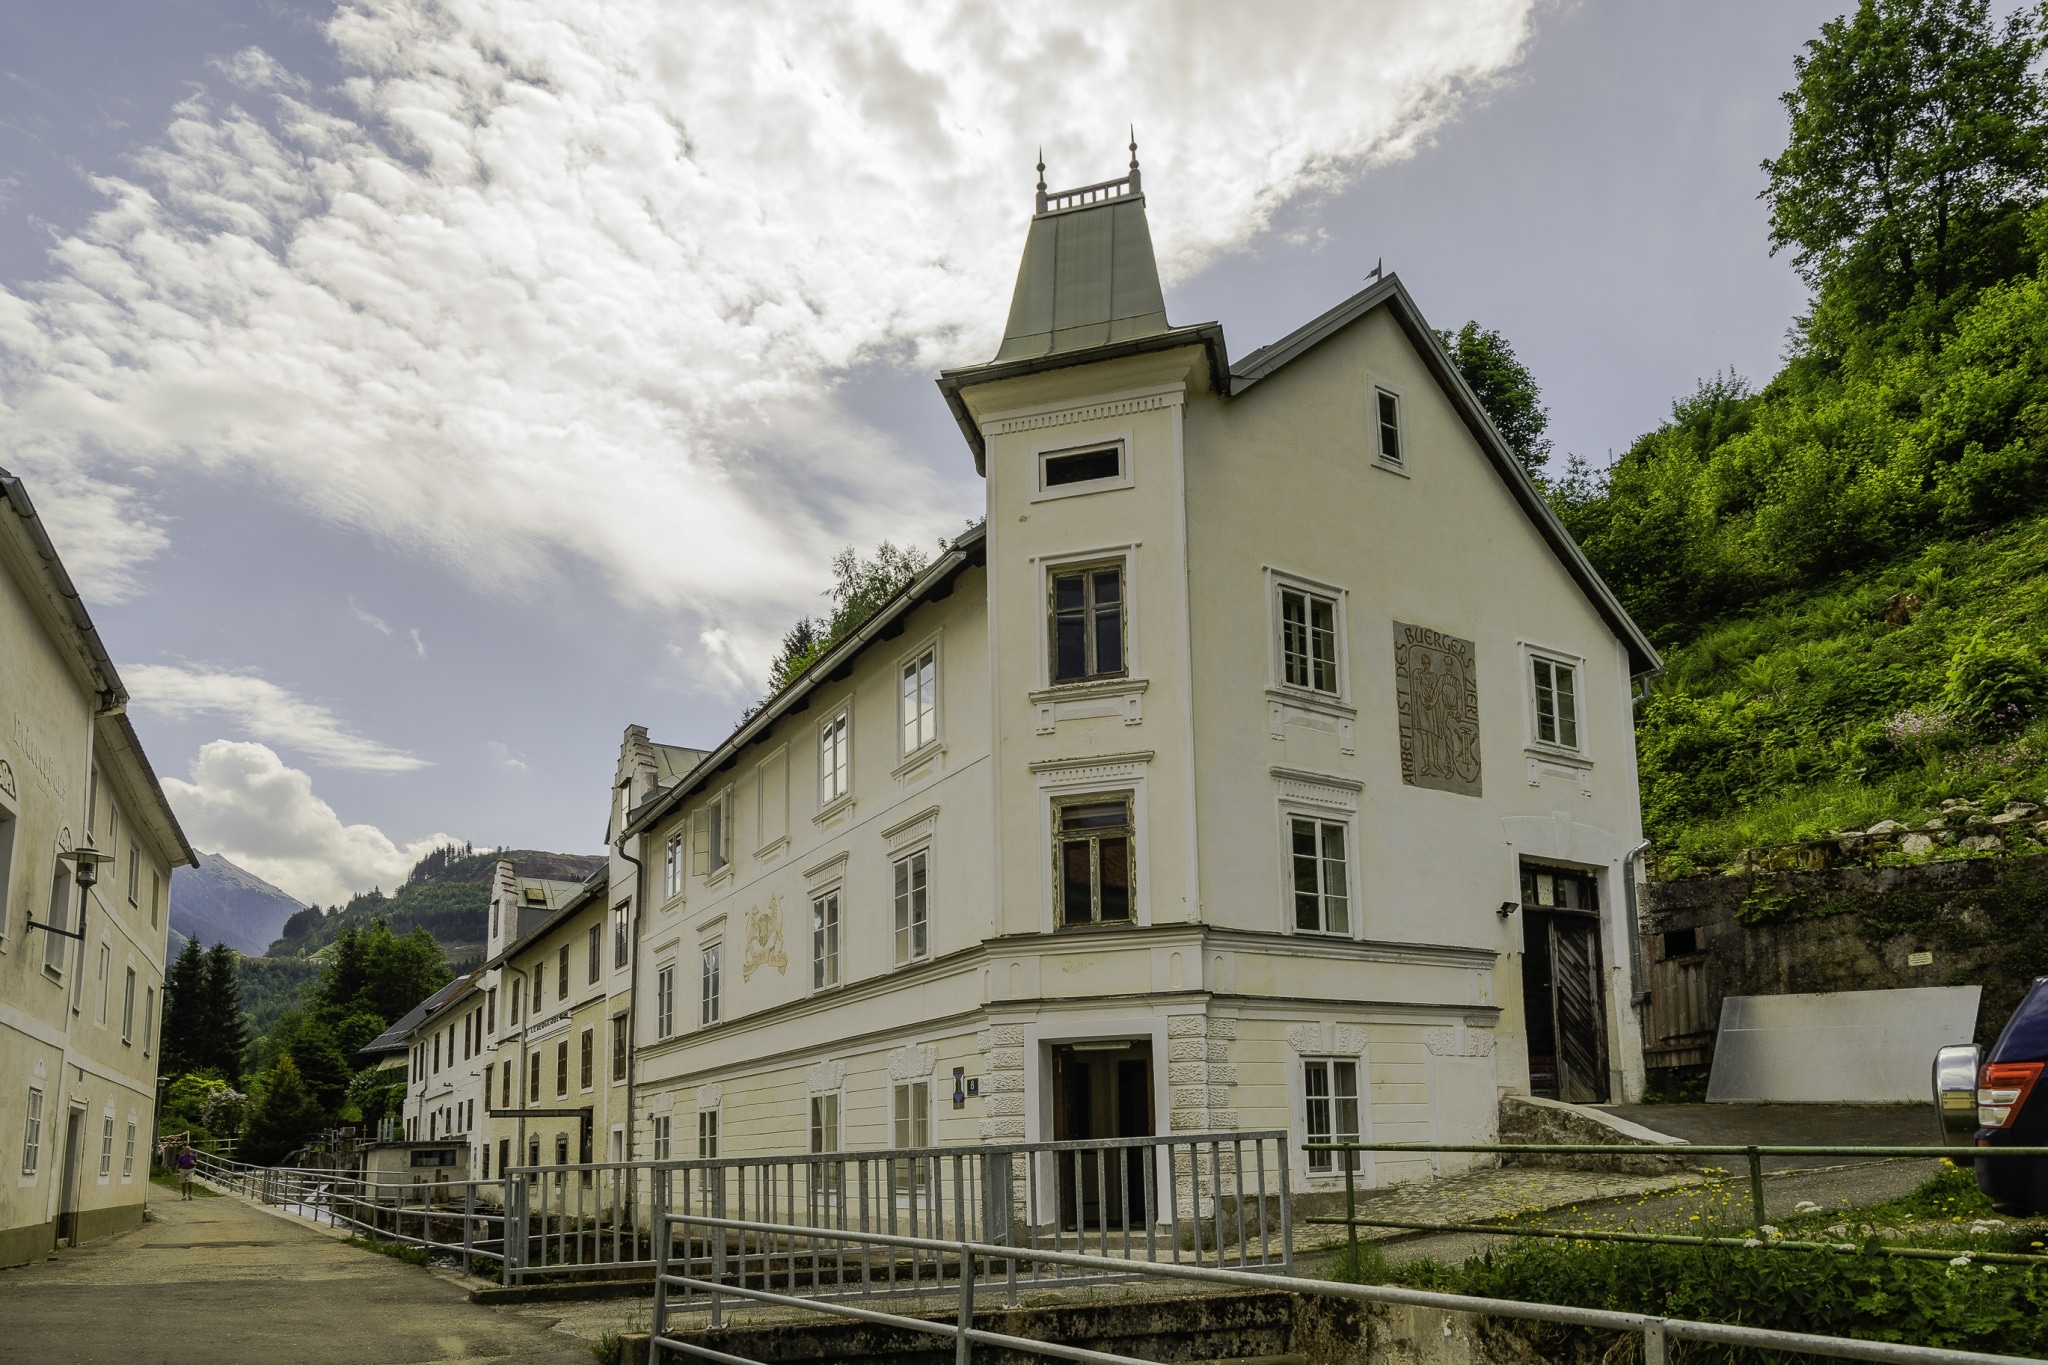 Wollsdorf sponsors Salzer tannery museum